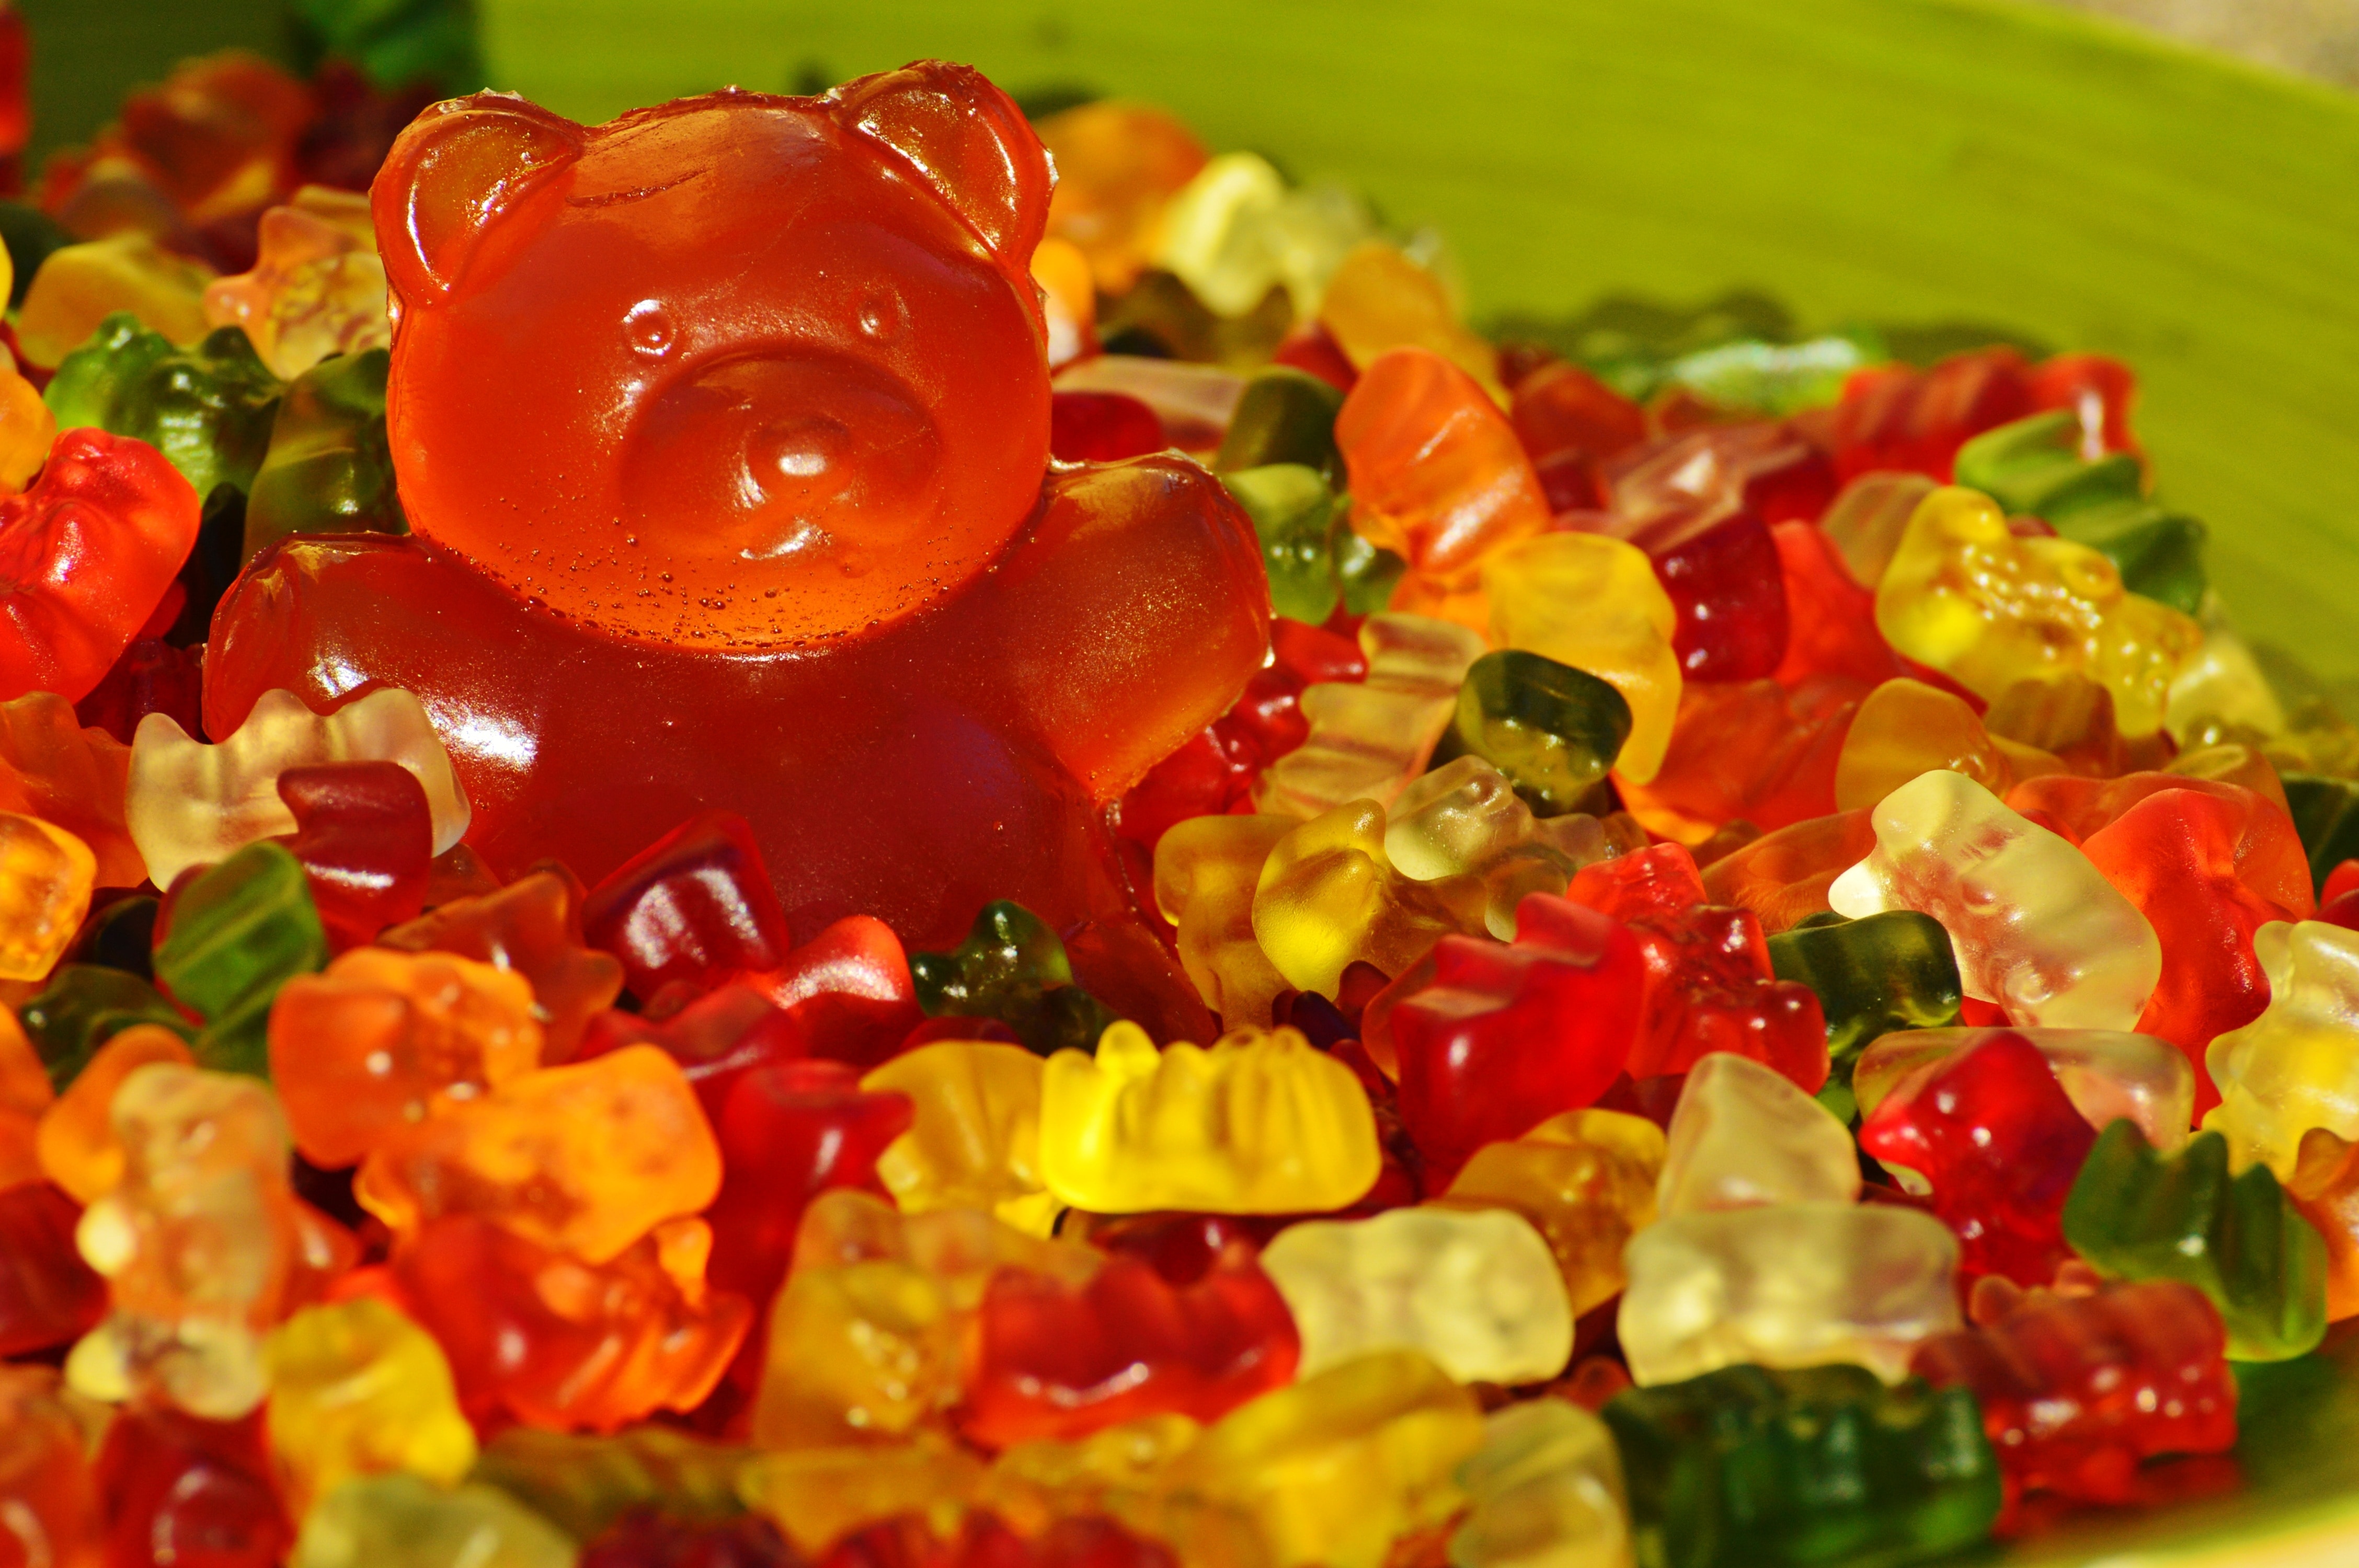 assorted gummy bears